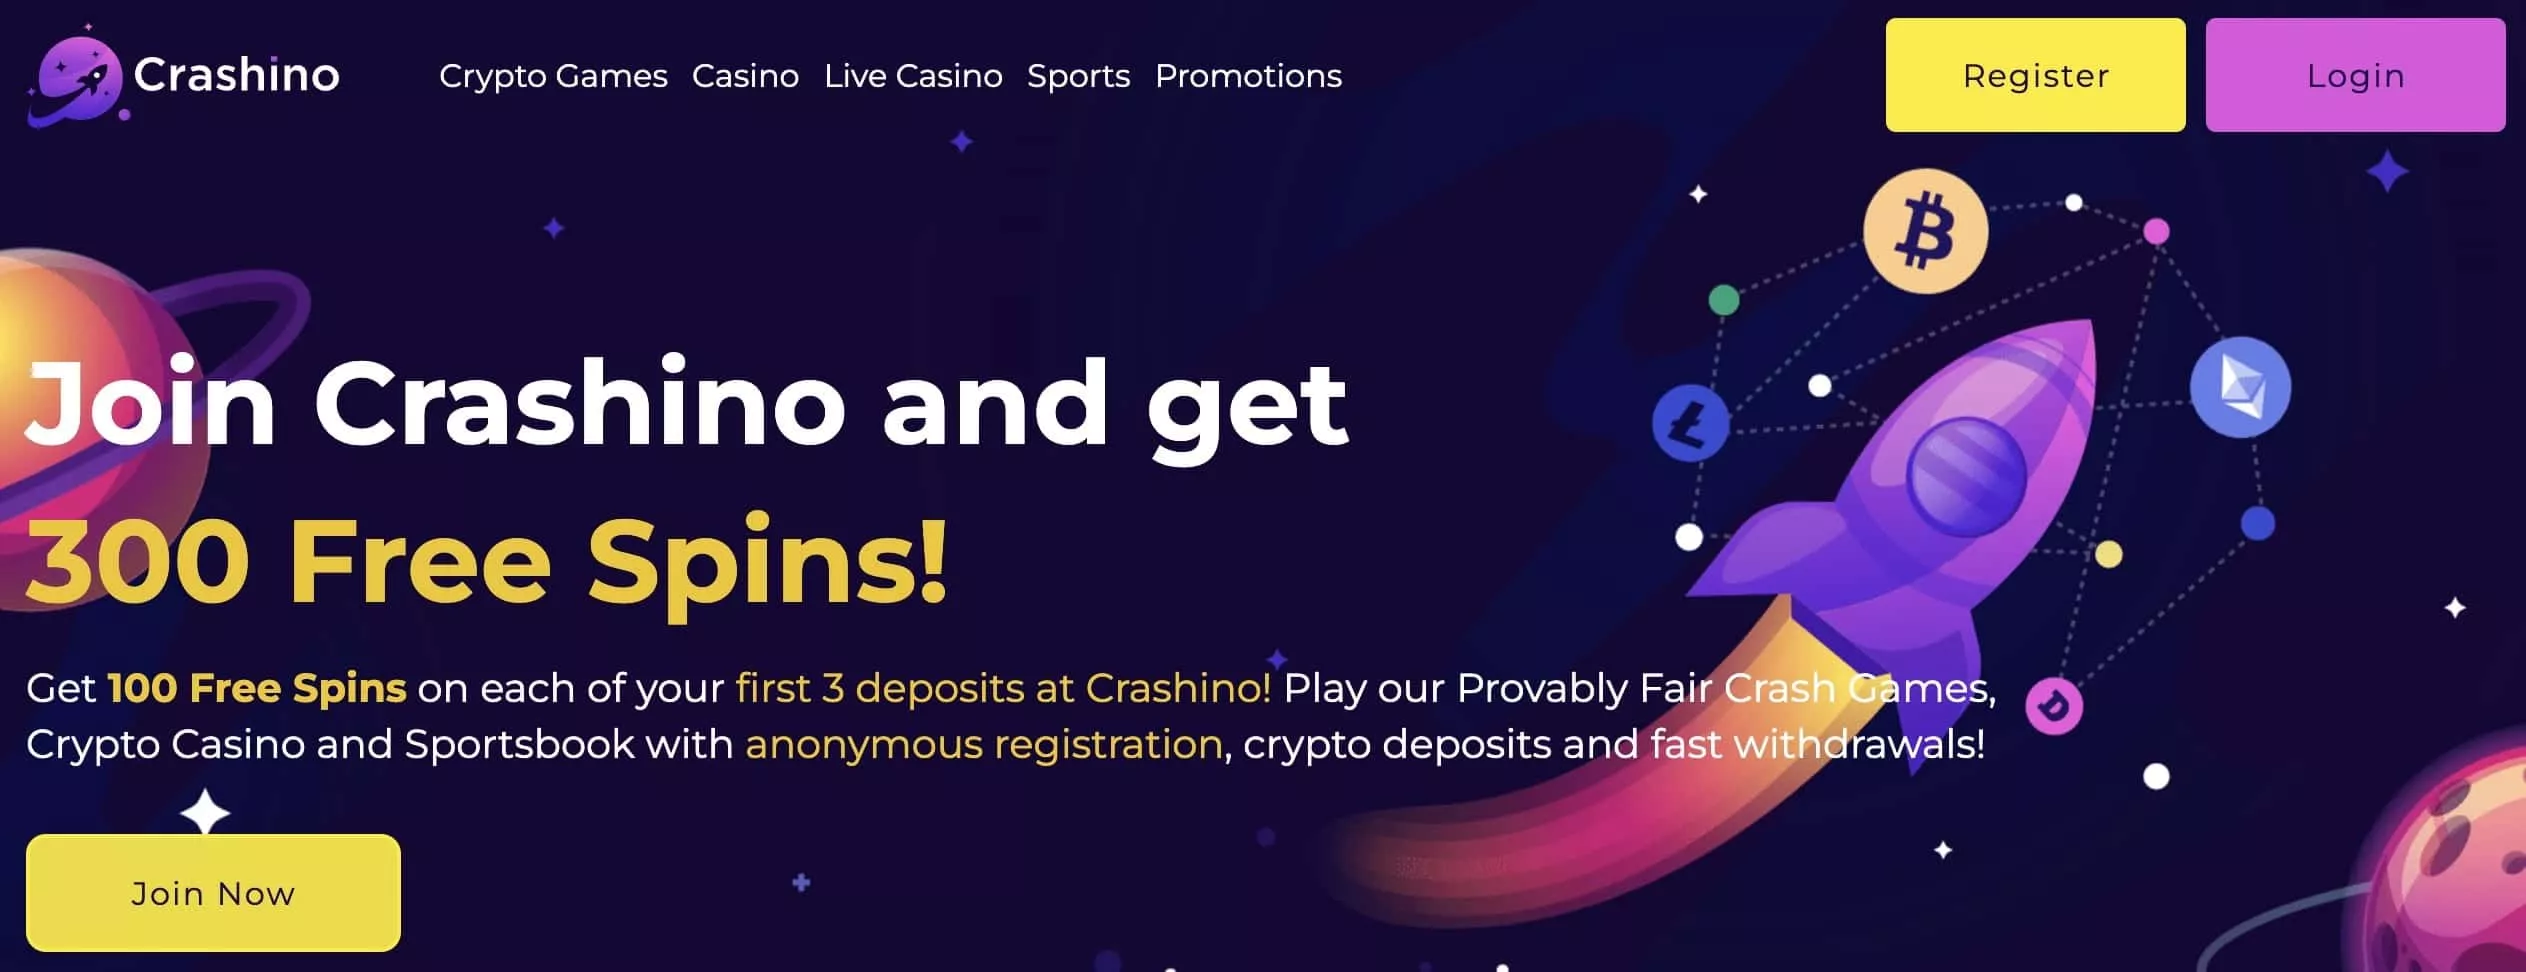 Crashino crypto gambling site homepage